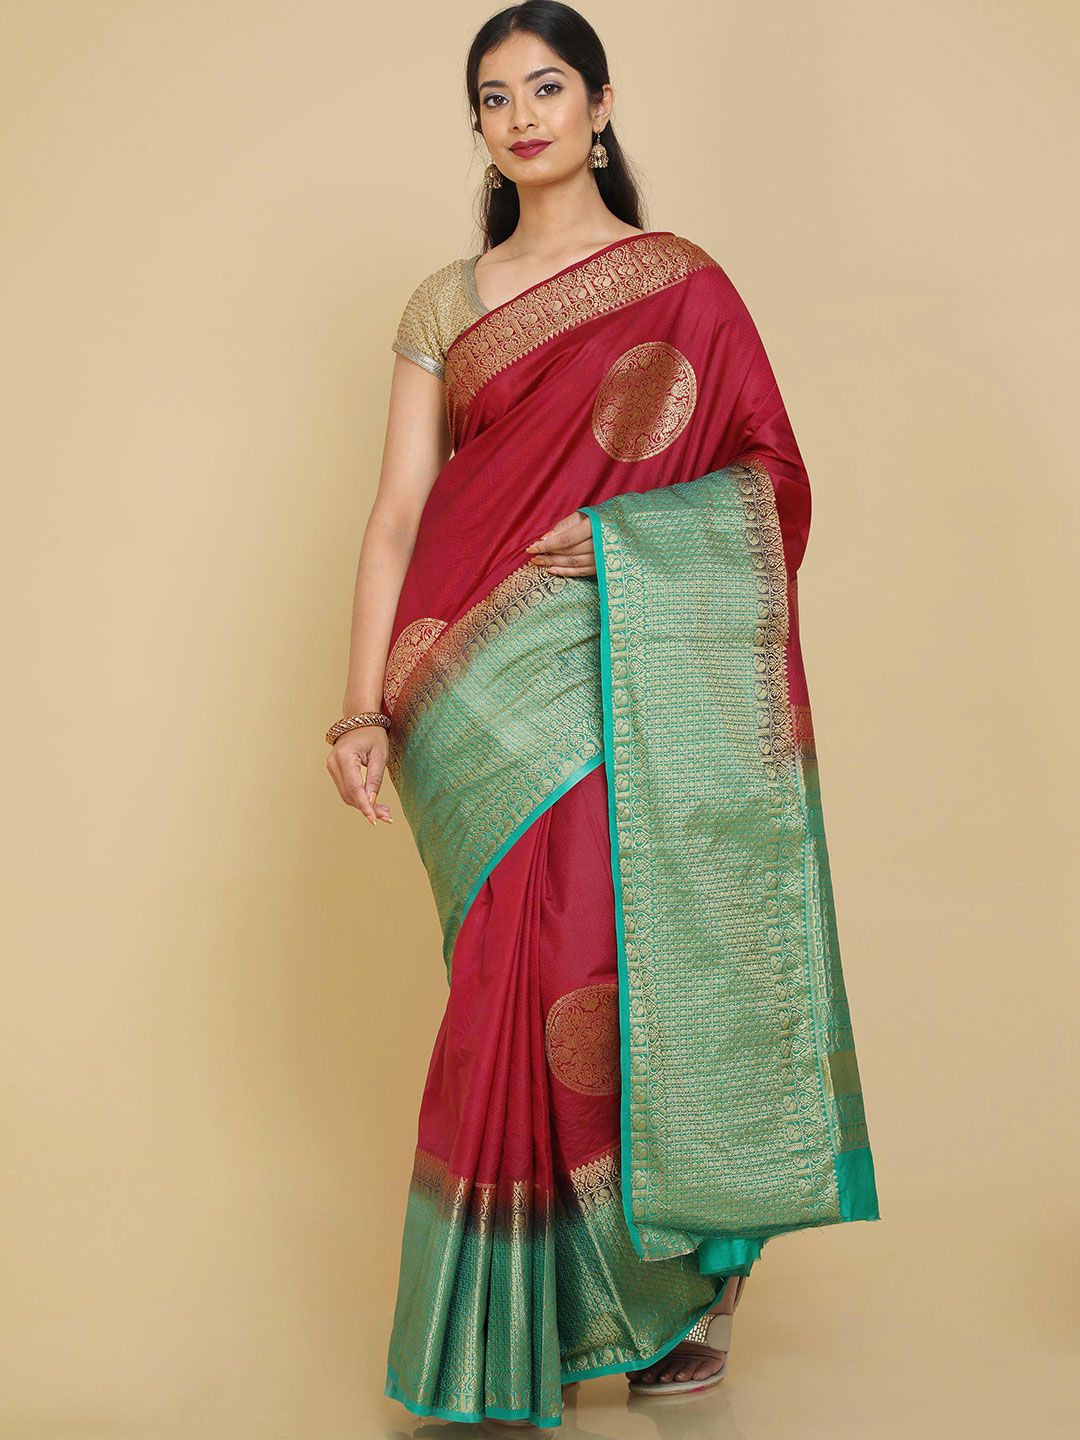 Kalamandir Maroon & Green Ethnic Motifs Silk Blend Banarasi Saree Price in India